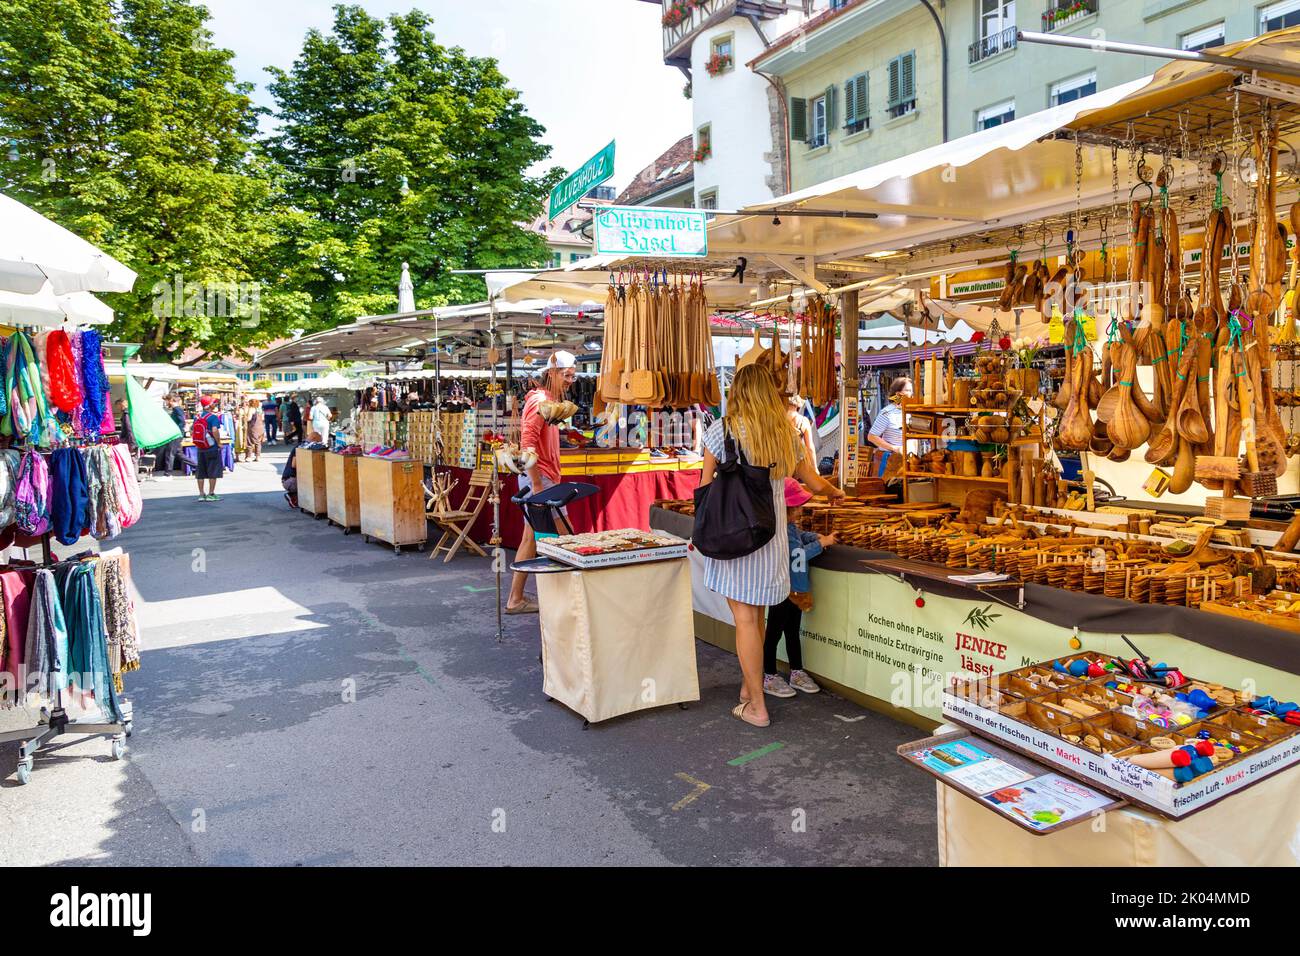 Stalls at the market in Waisenhausplatz (Markt Waisenhausplatz), Bern, Switzerland Stock Photo